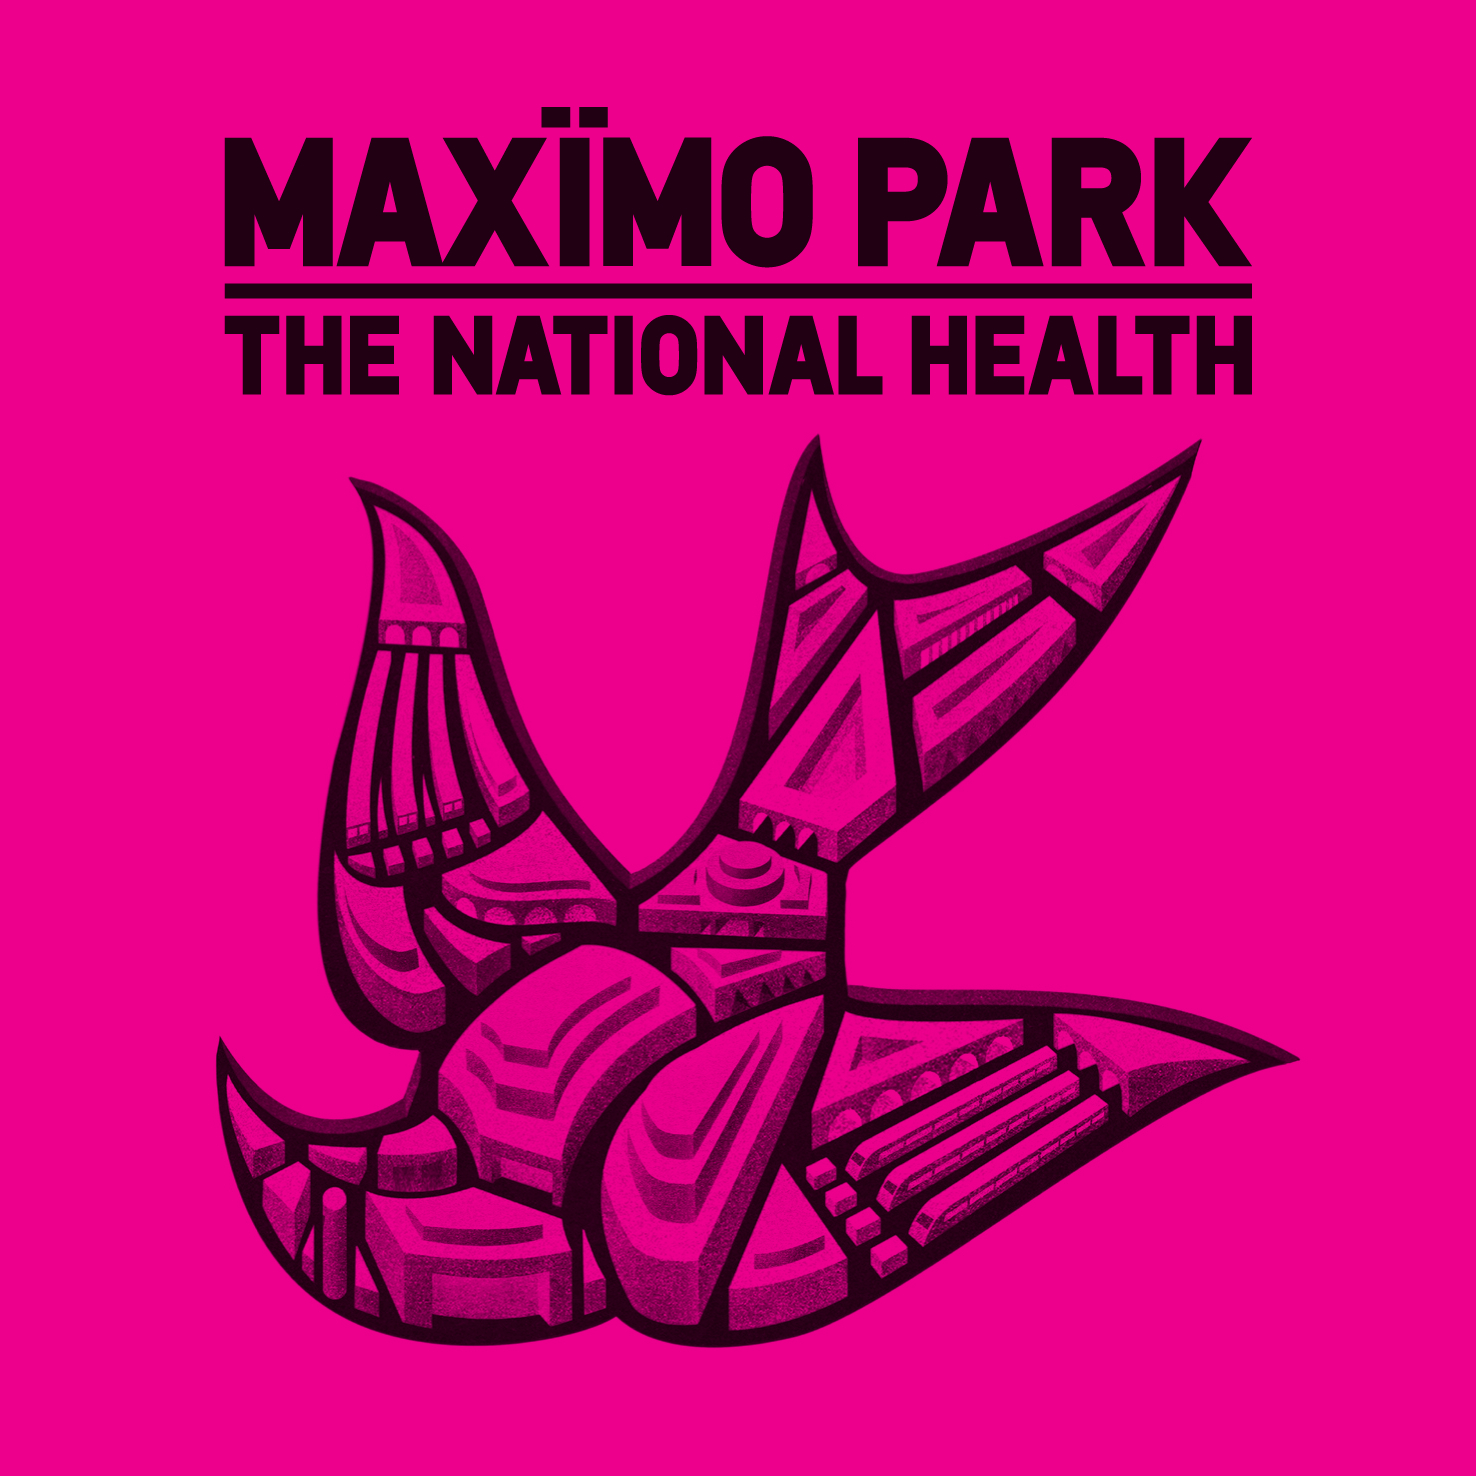 MAXIMO PARK – Albumstream “The National Health”